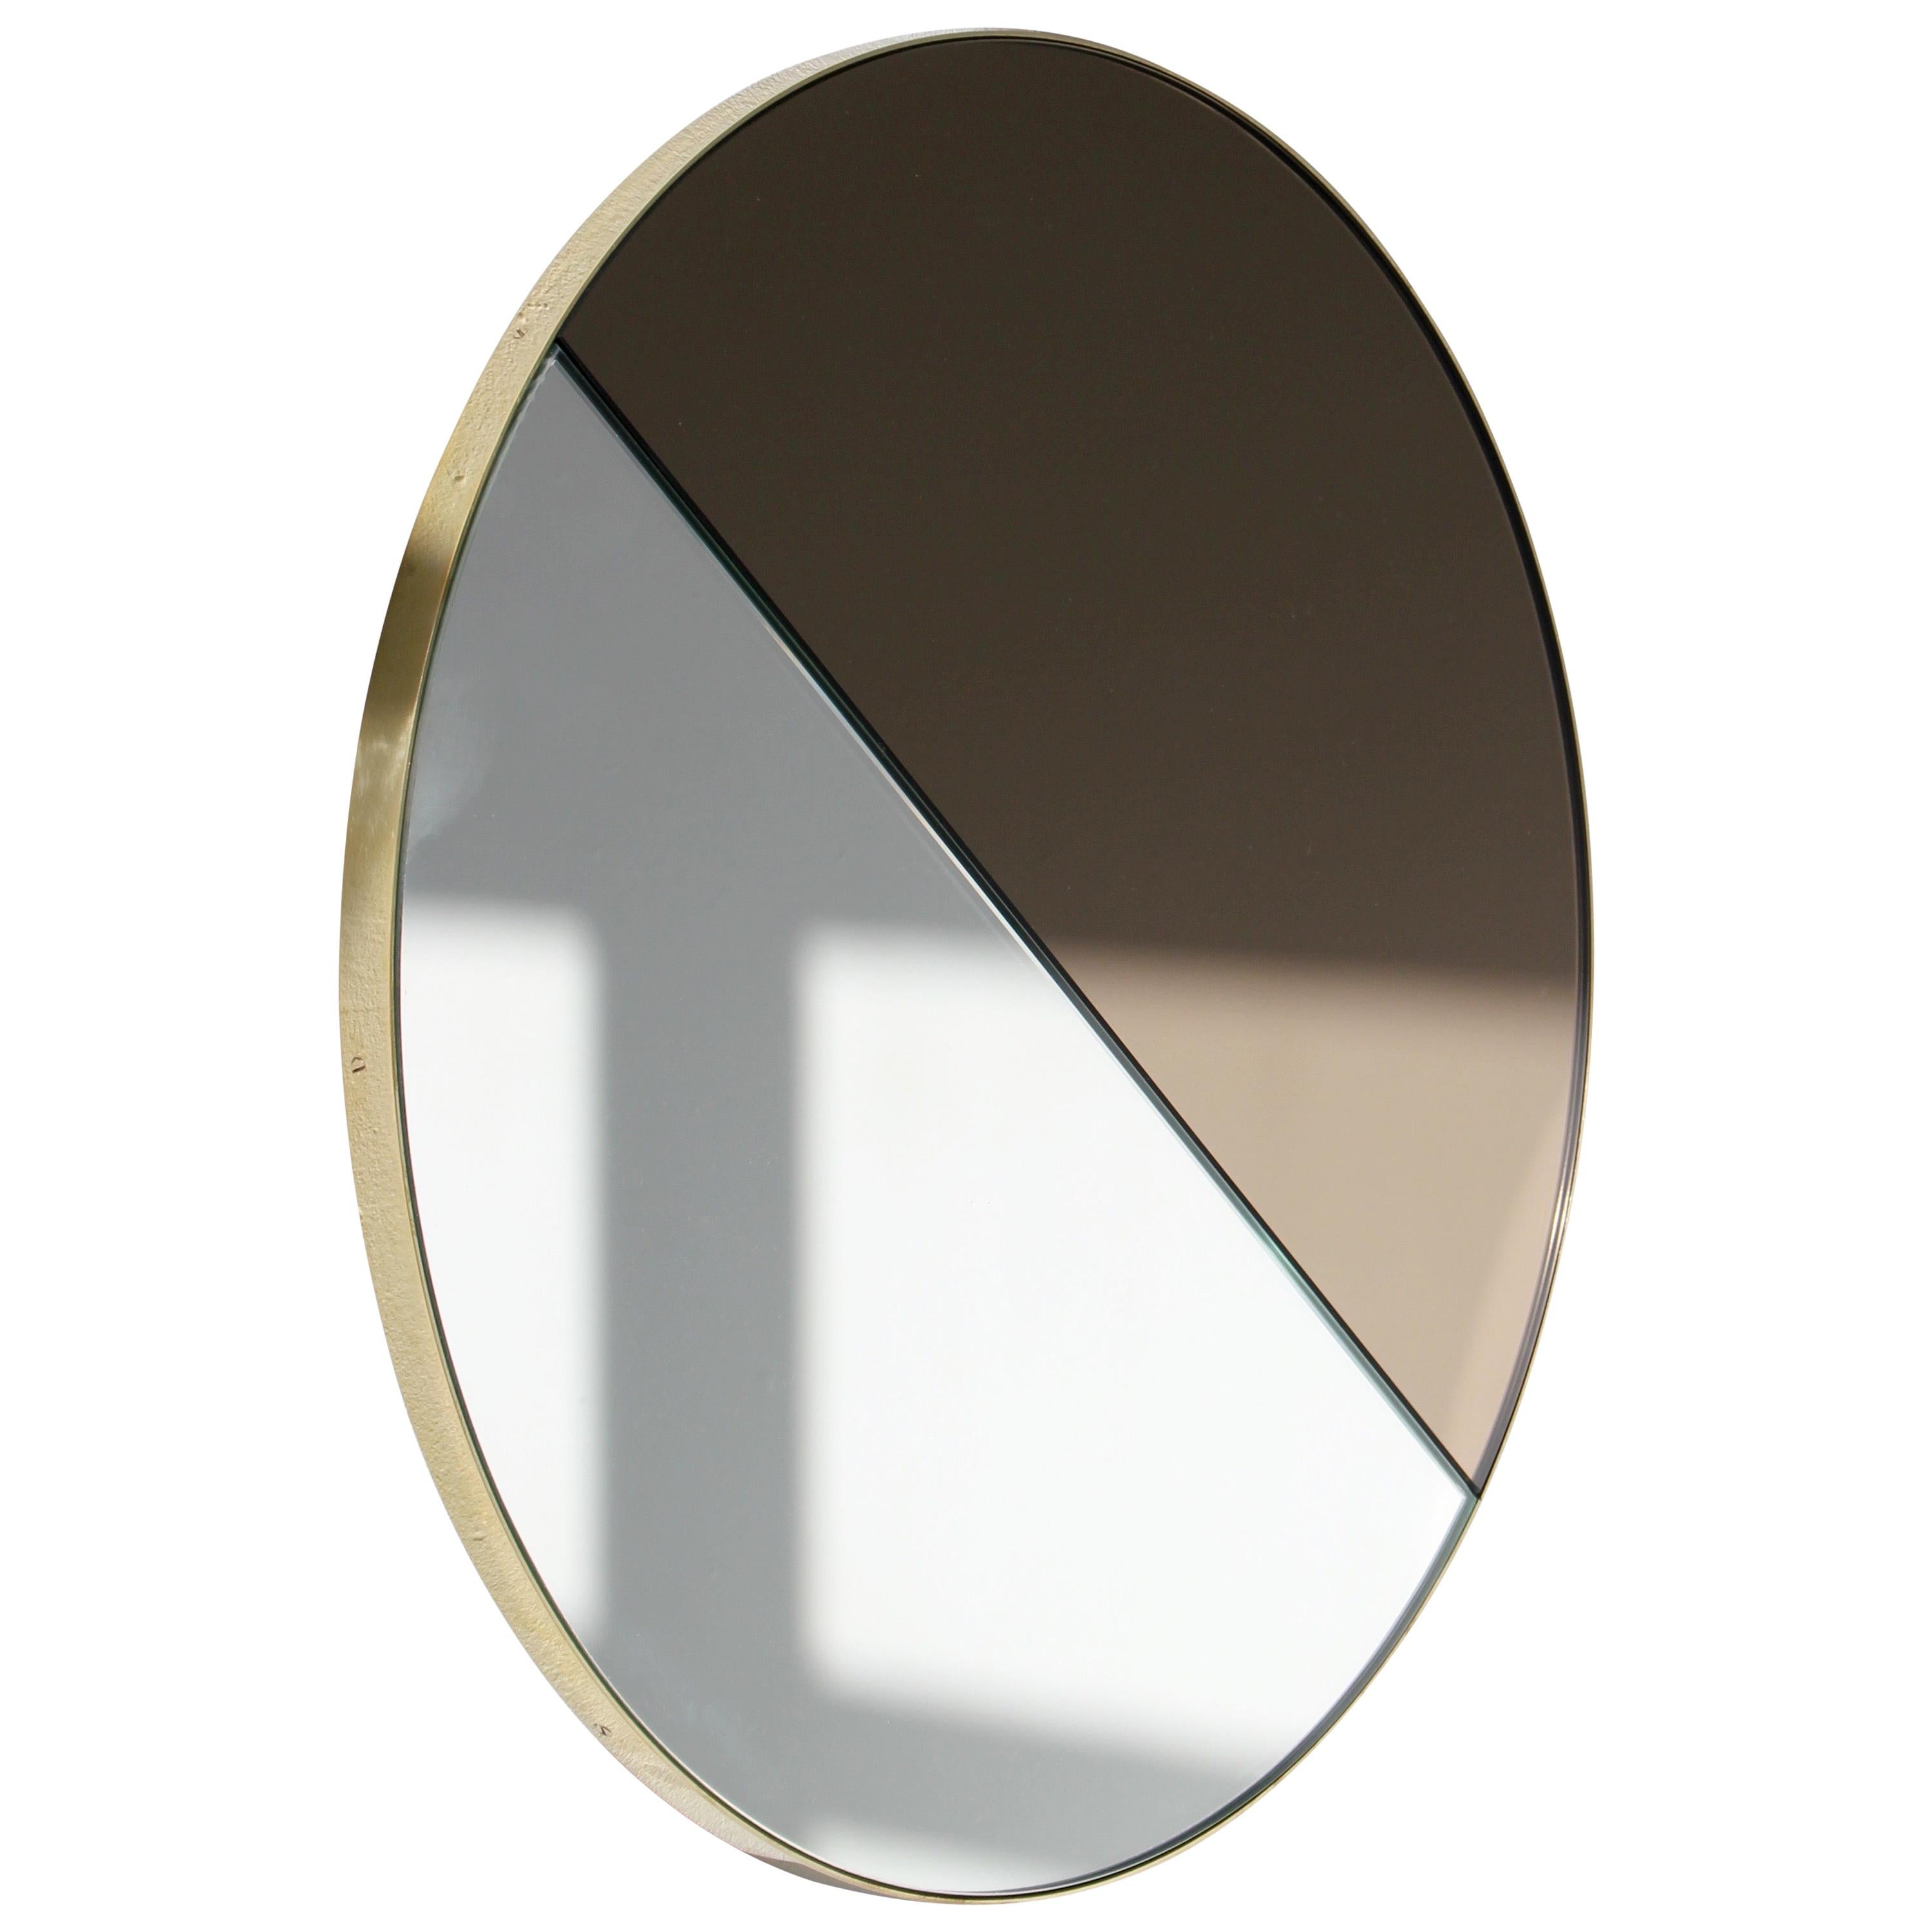 Orbis Dualis Mixed Silver + Bronze Round Mirror with Brass Frame, Medium For Sale